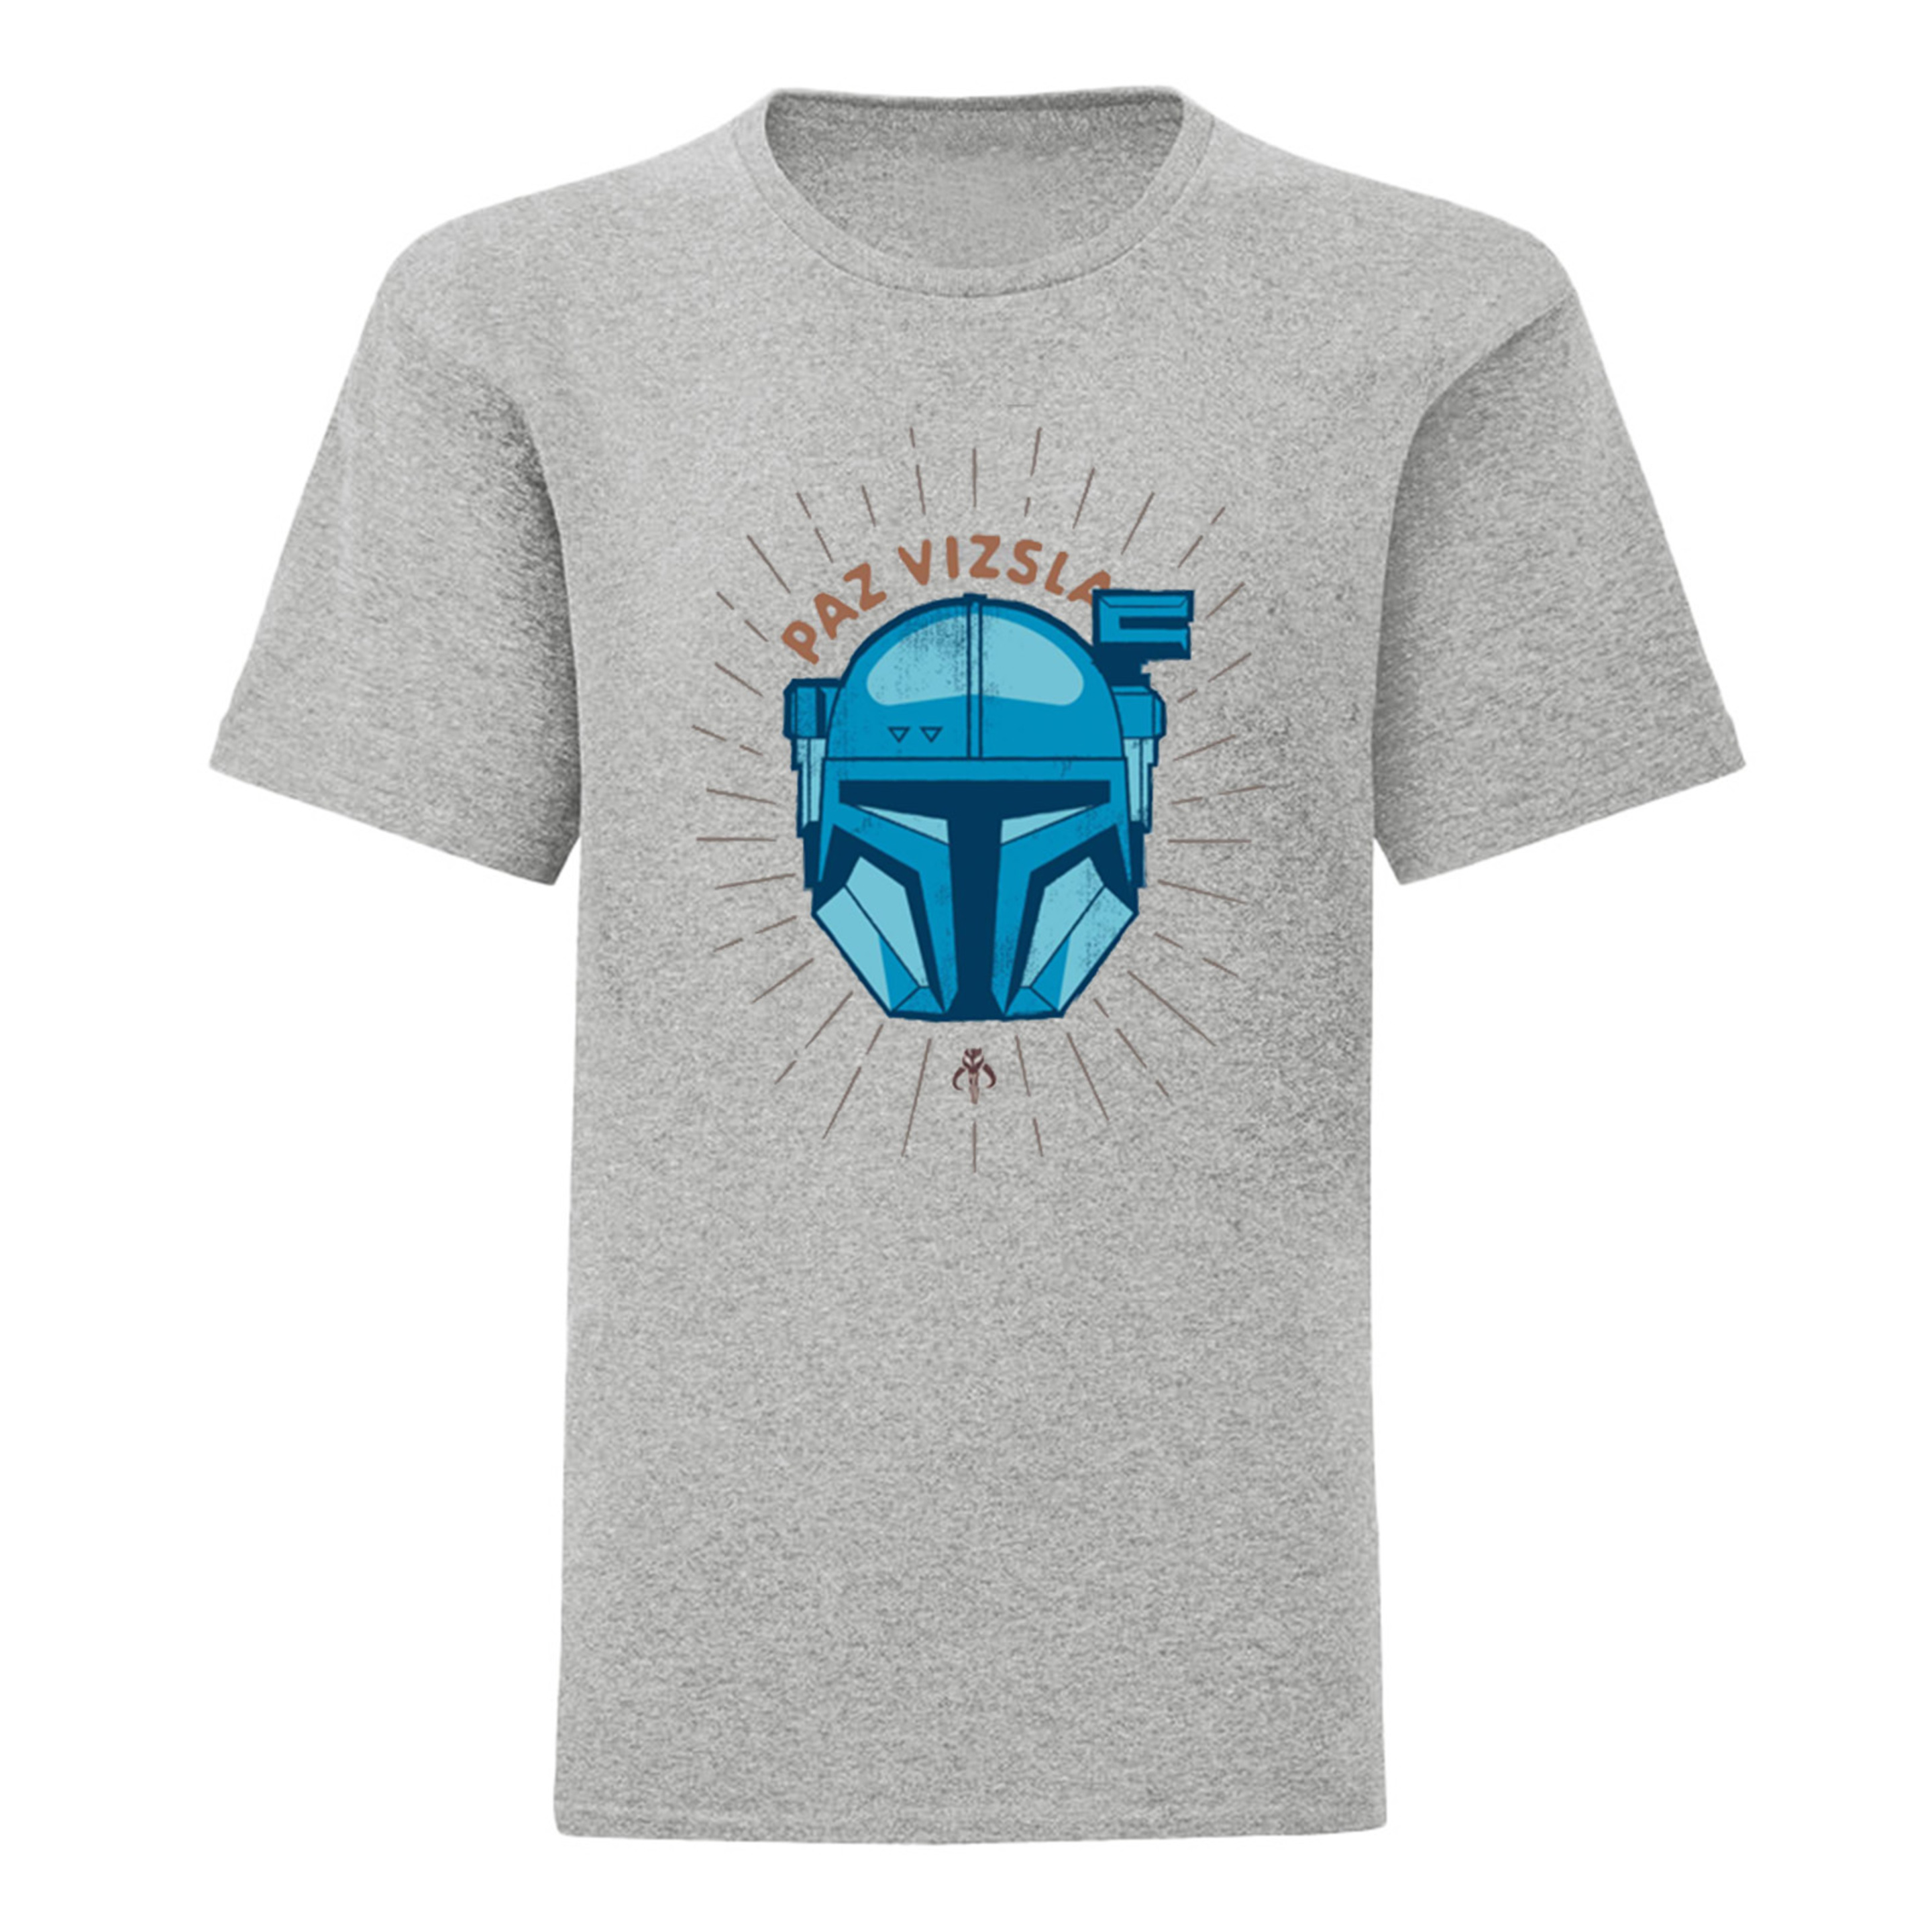 Camiseta Paz Vizsla Niño Star Wars: The Mandalorian